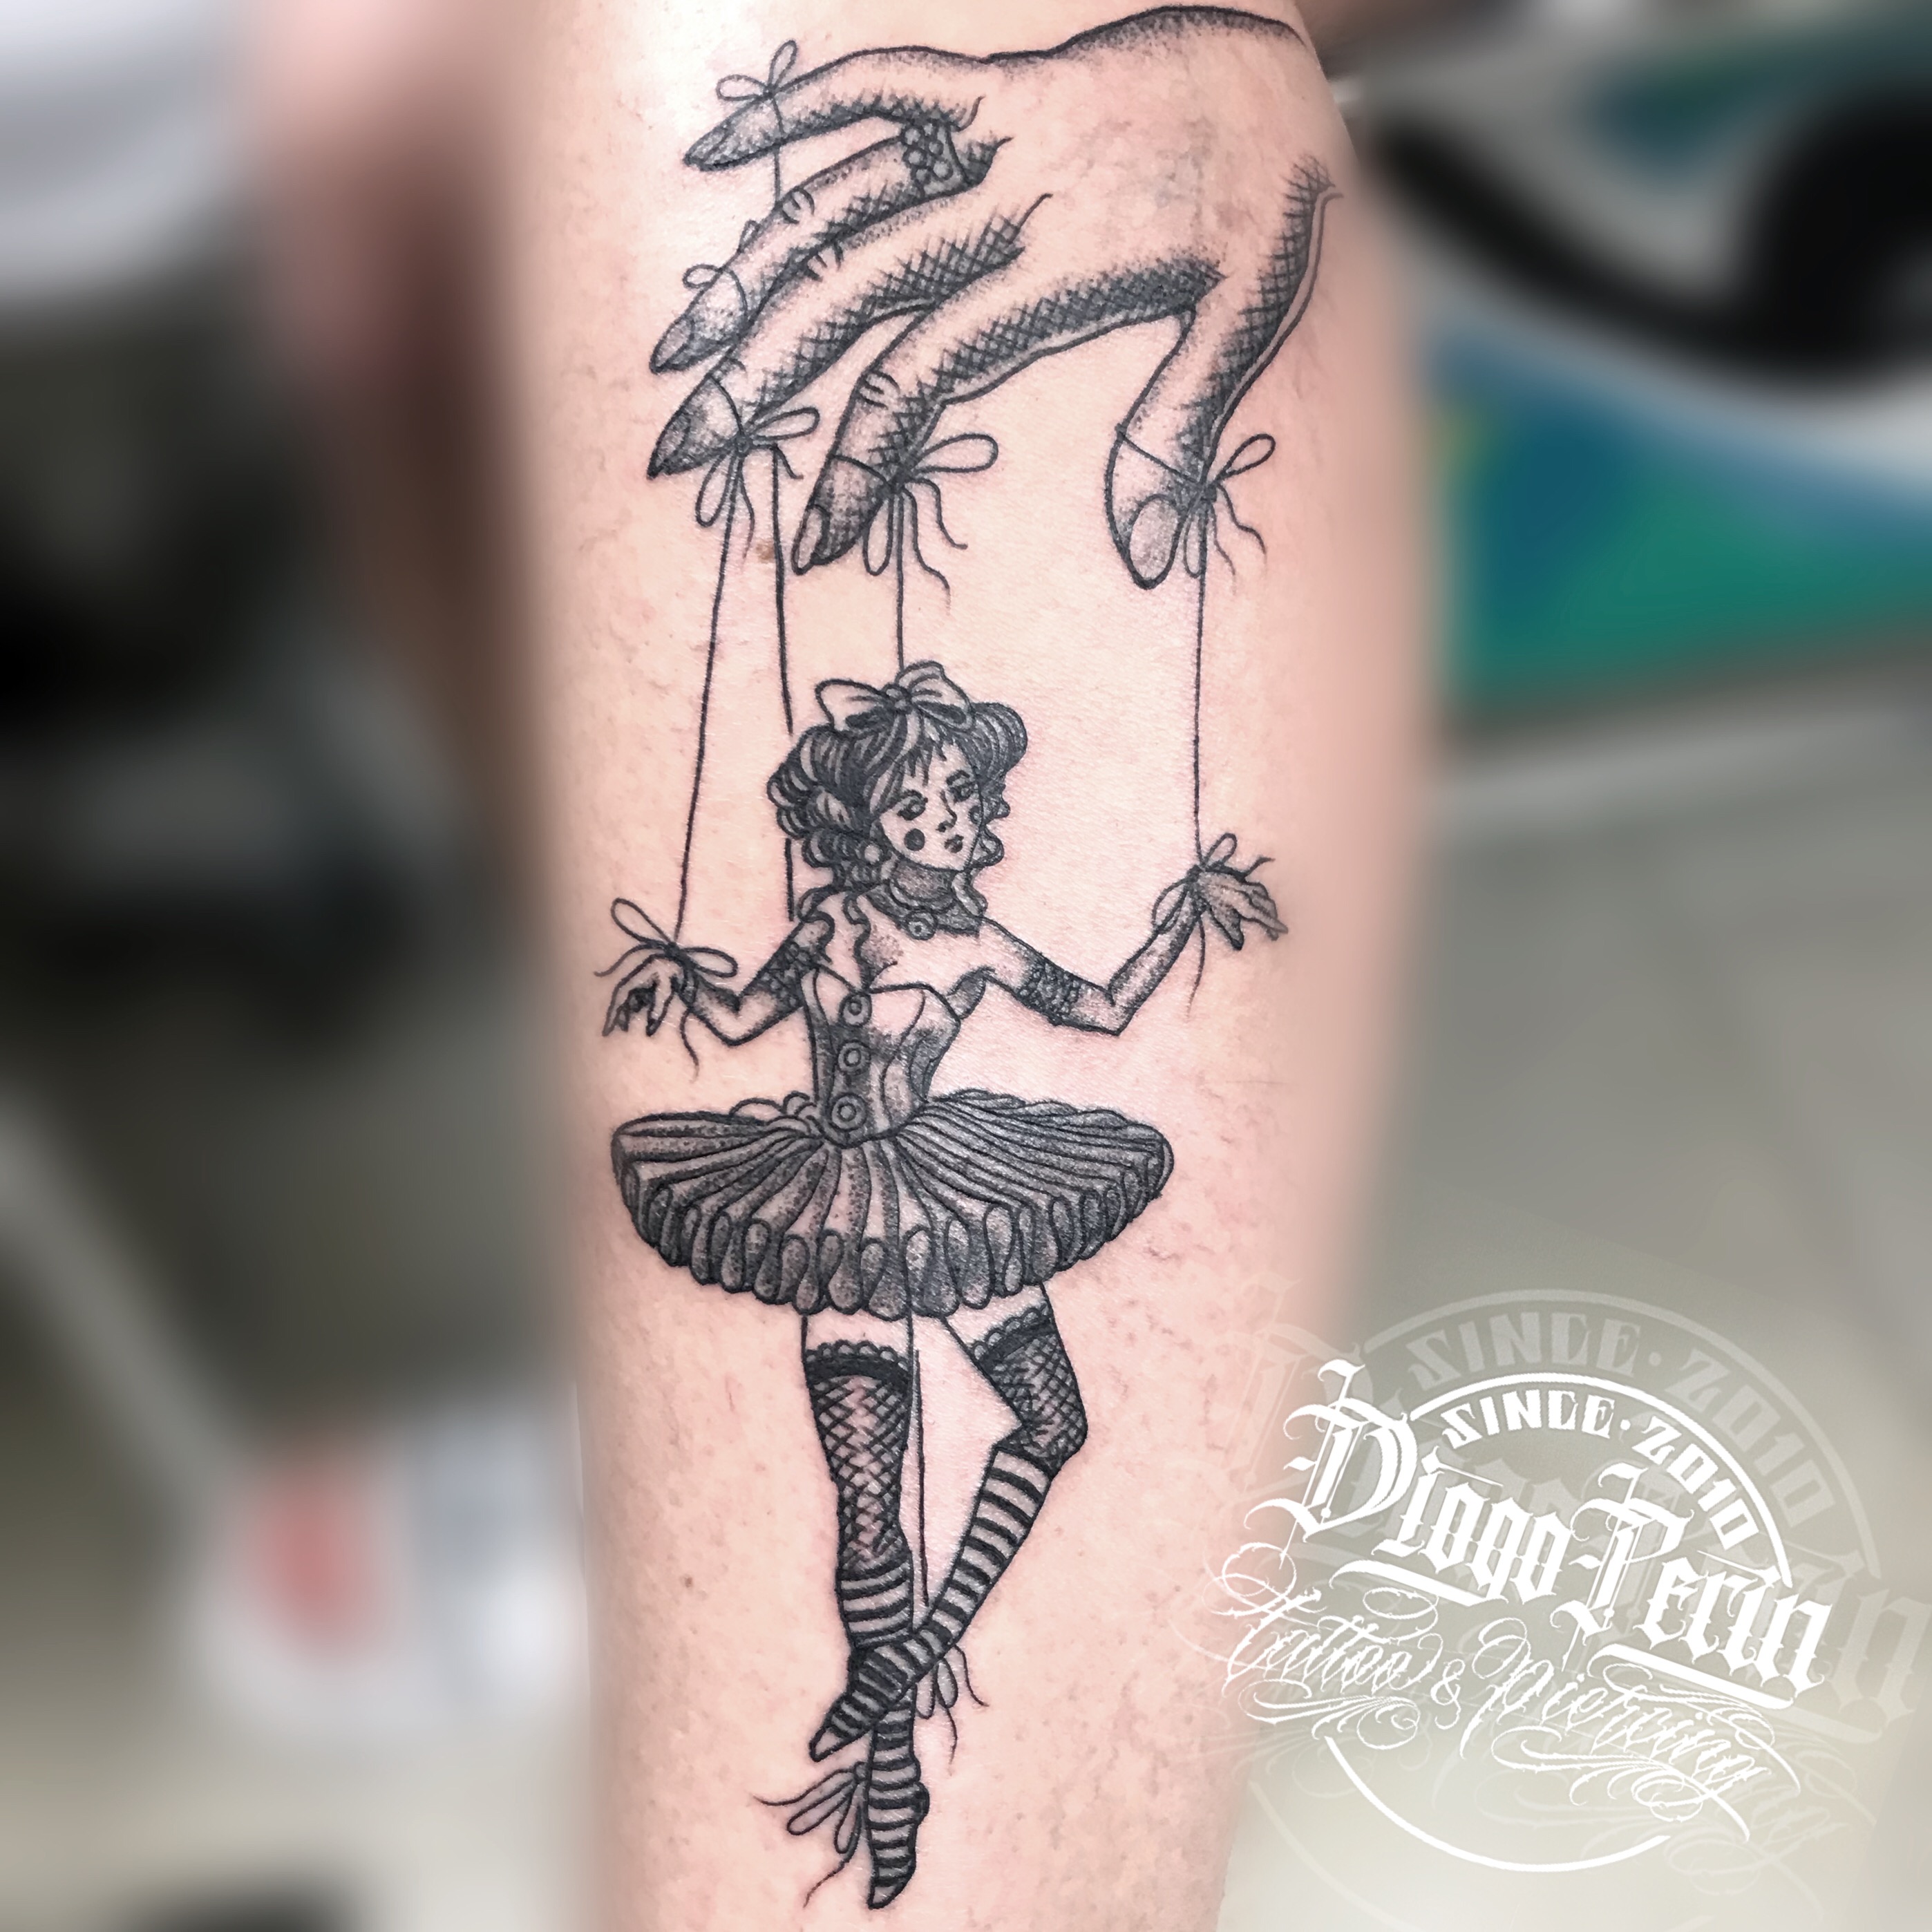 Tattoo realizado por @diogoperin #marioneta #dotwork #tattoospain #tattooalicante #tattoosantapola